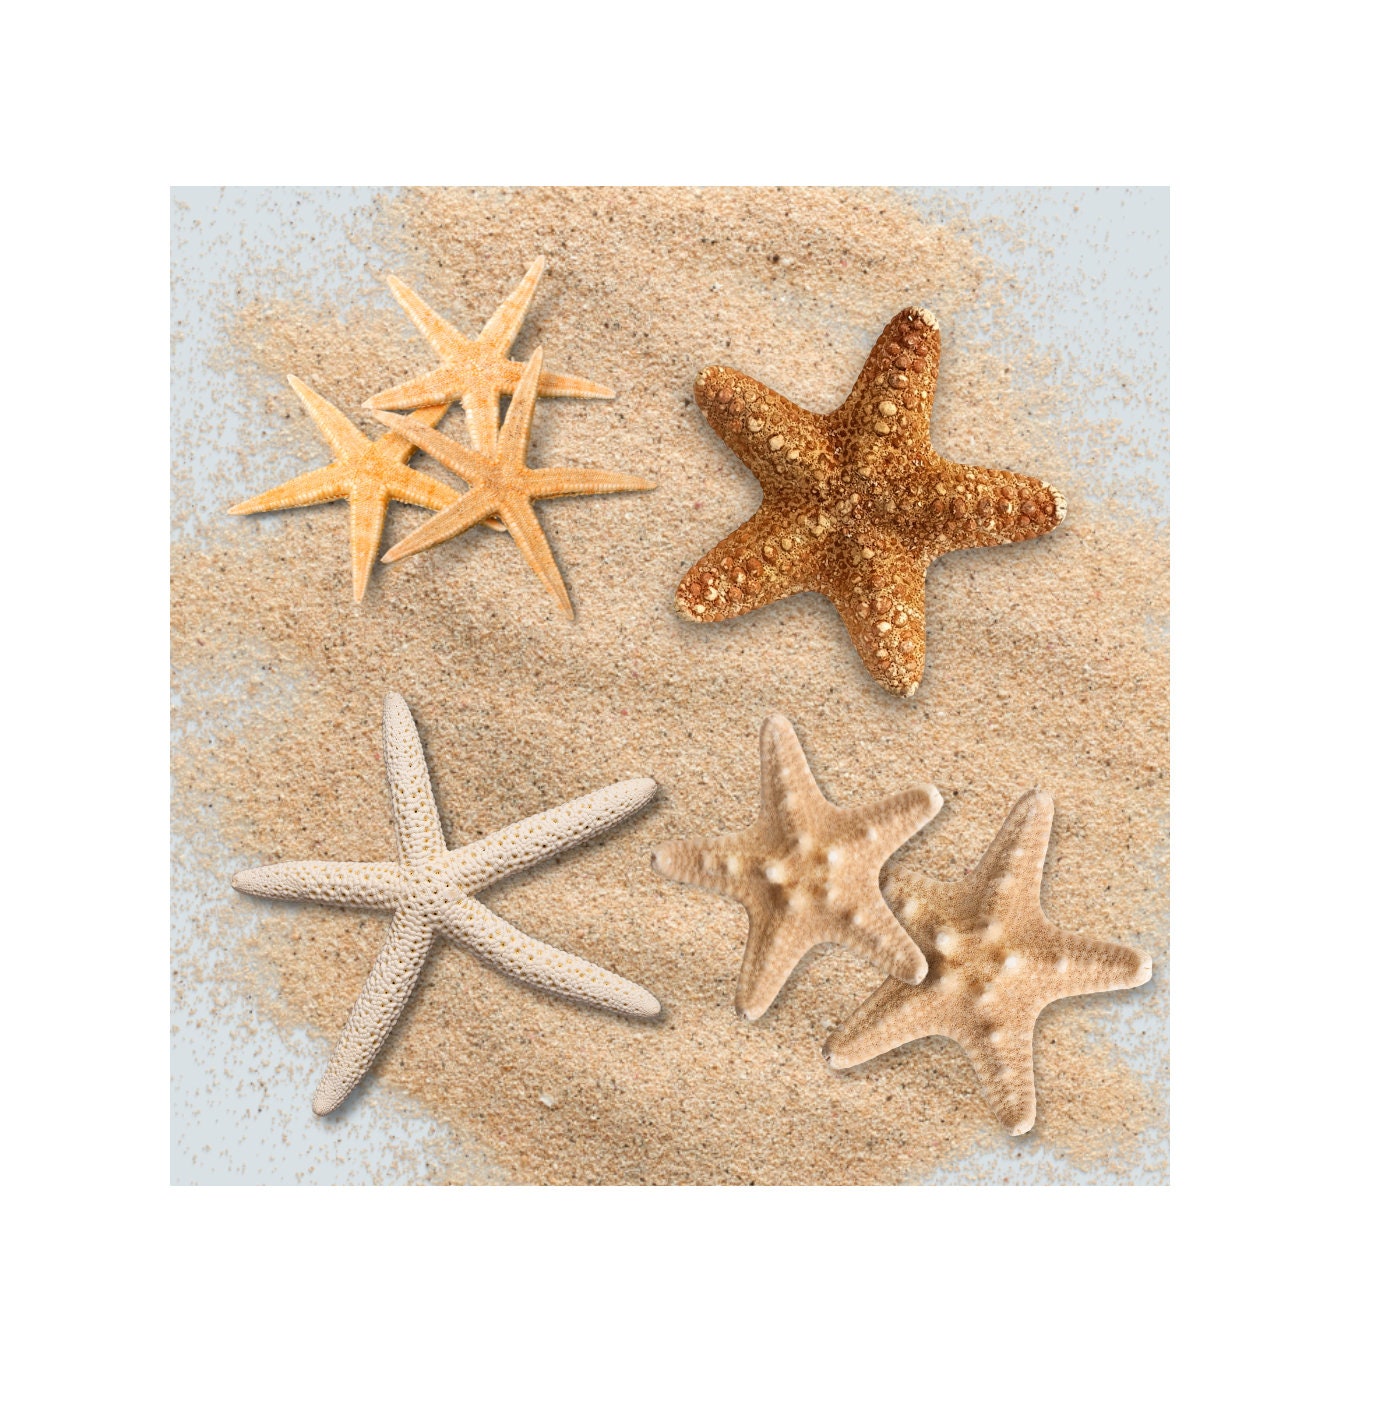  angwang Estrella de mar natural, 1 caja de estrellas de mar  naturales, conchas de mar, artesanía, estrellas de mar naturales,  bricolaje, decoración de boda, resina epoxi, artesanías de 0.4-2.0 in D # 